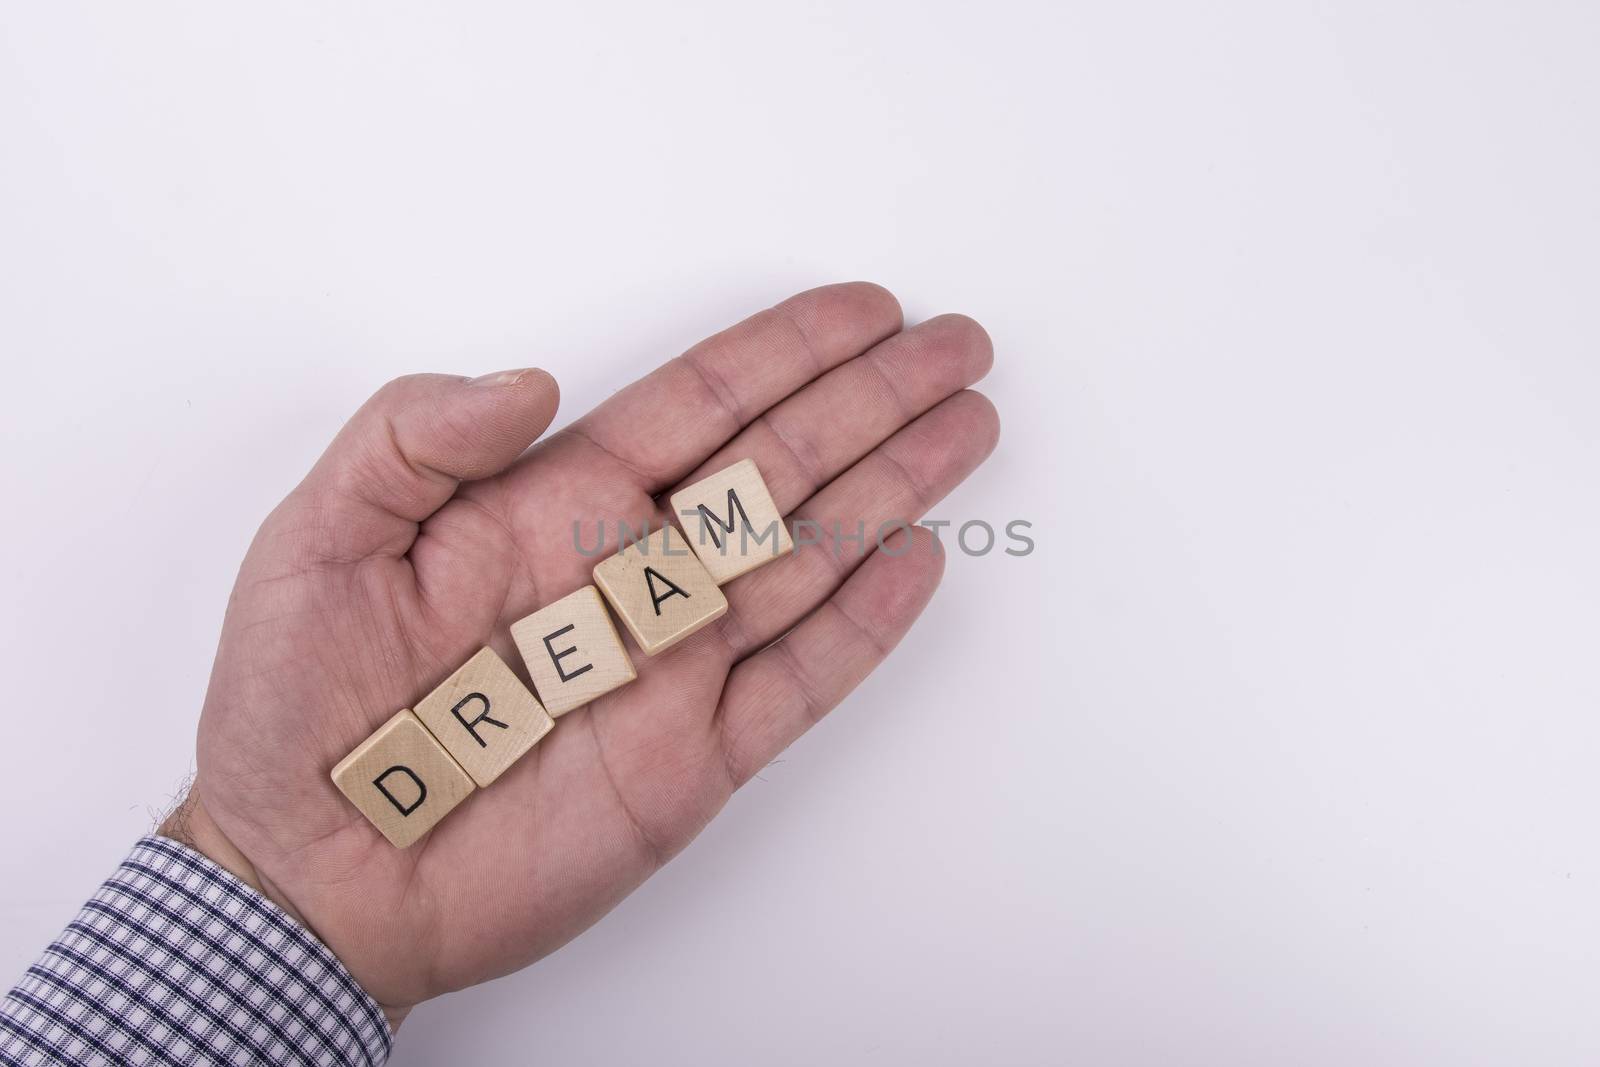 the word "dream" written with letters written on wooden blocks